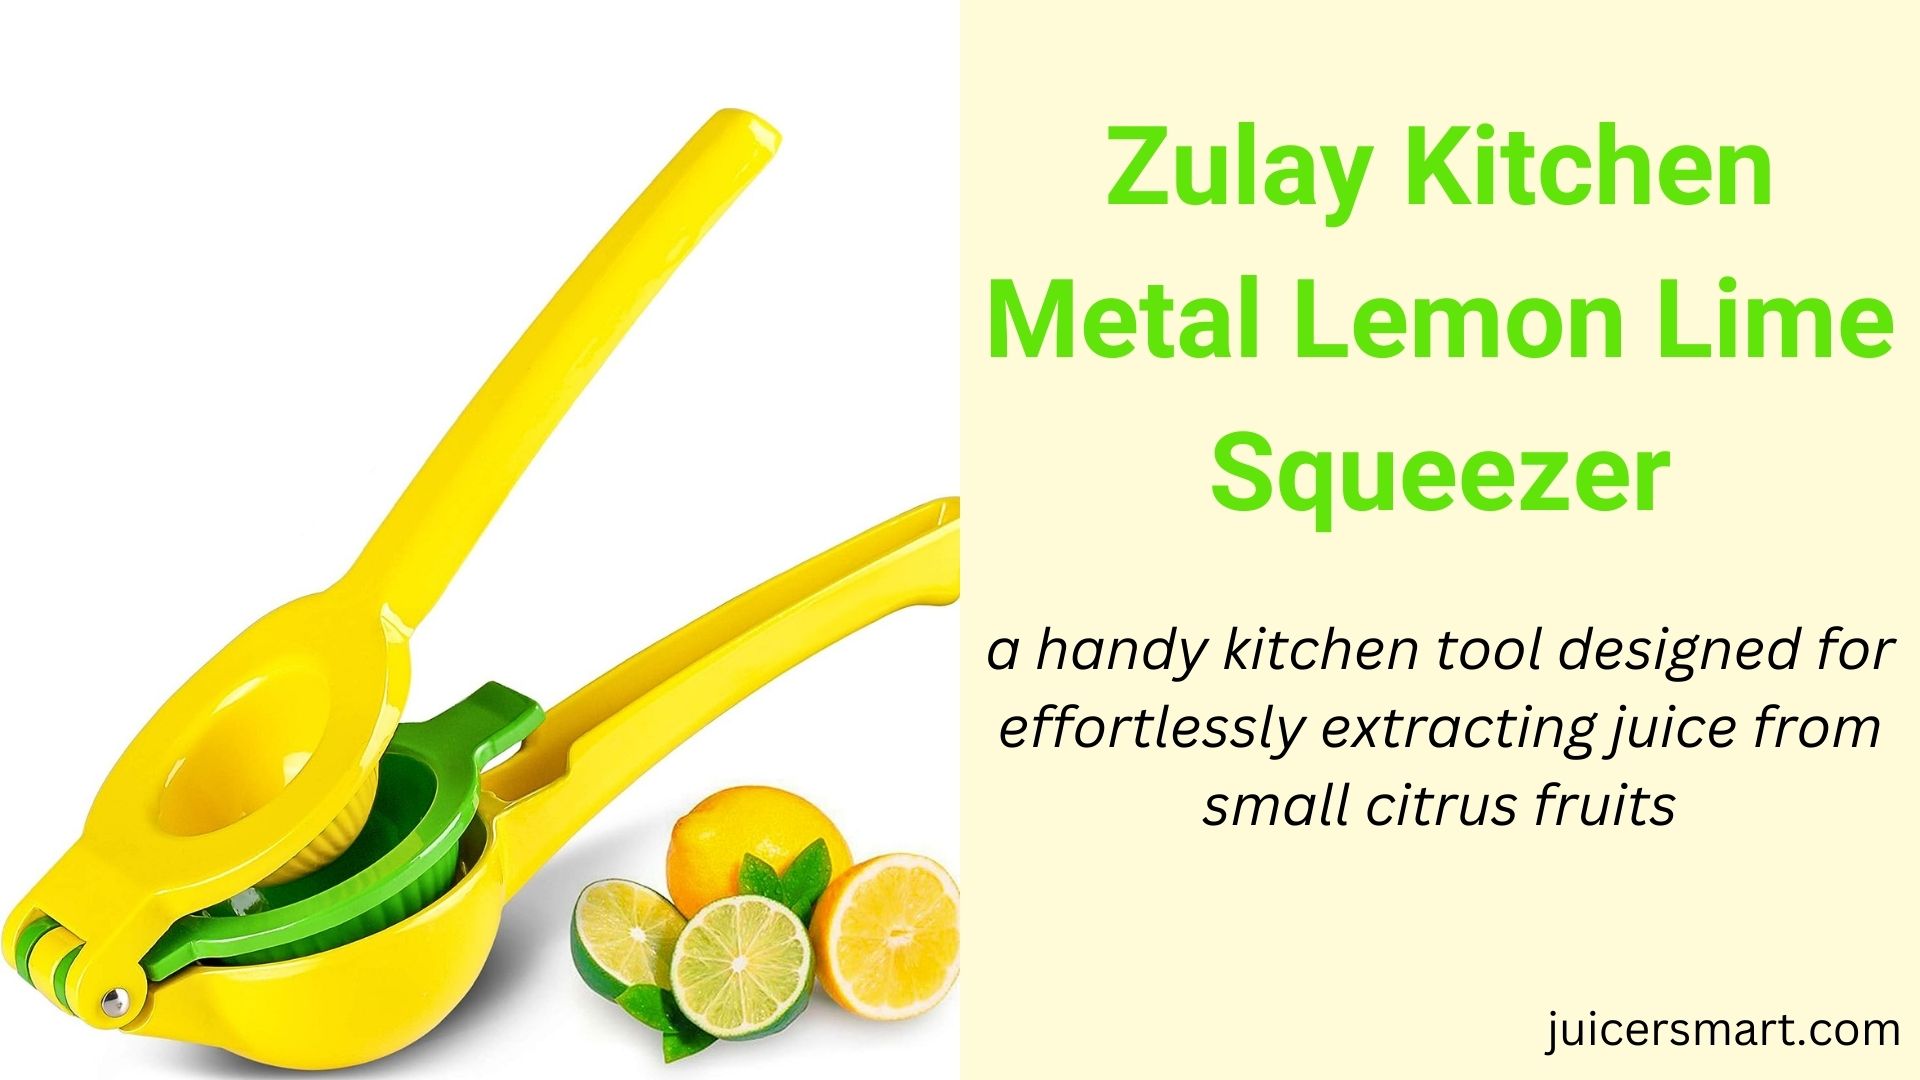 Zulay Kitchen Metal Lemon Lime Squeezer